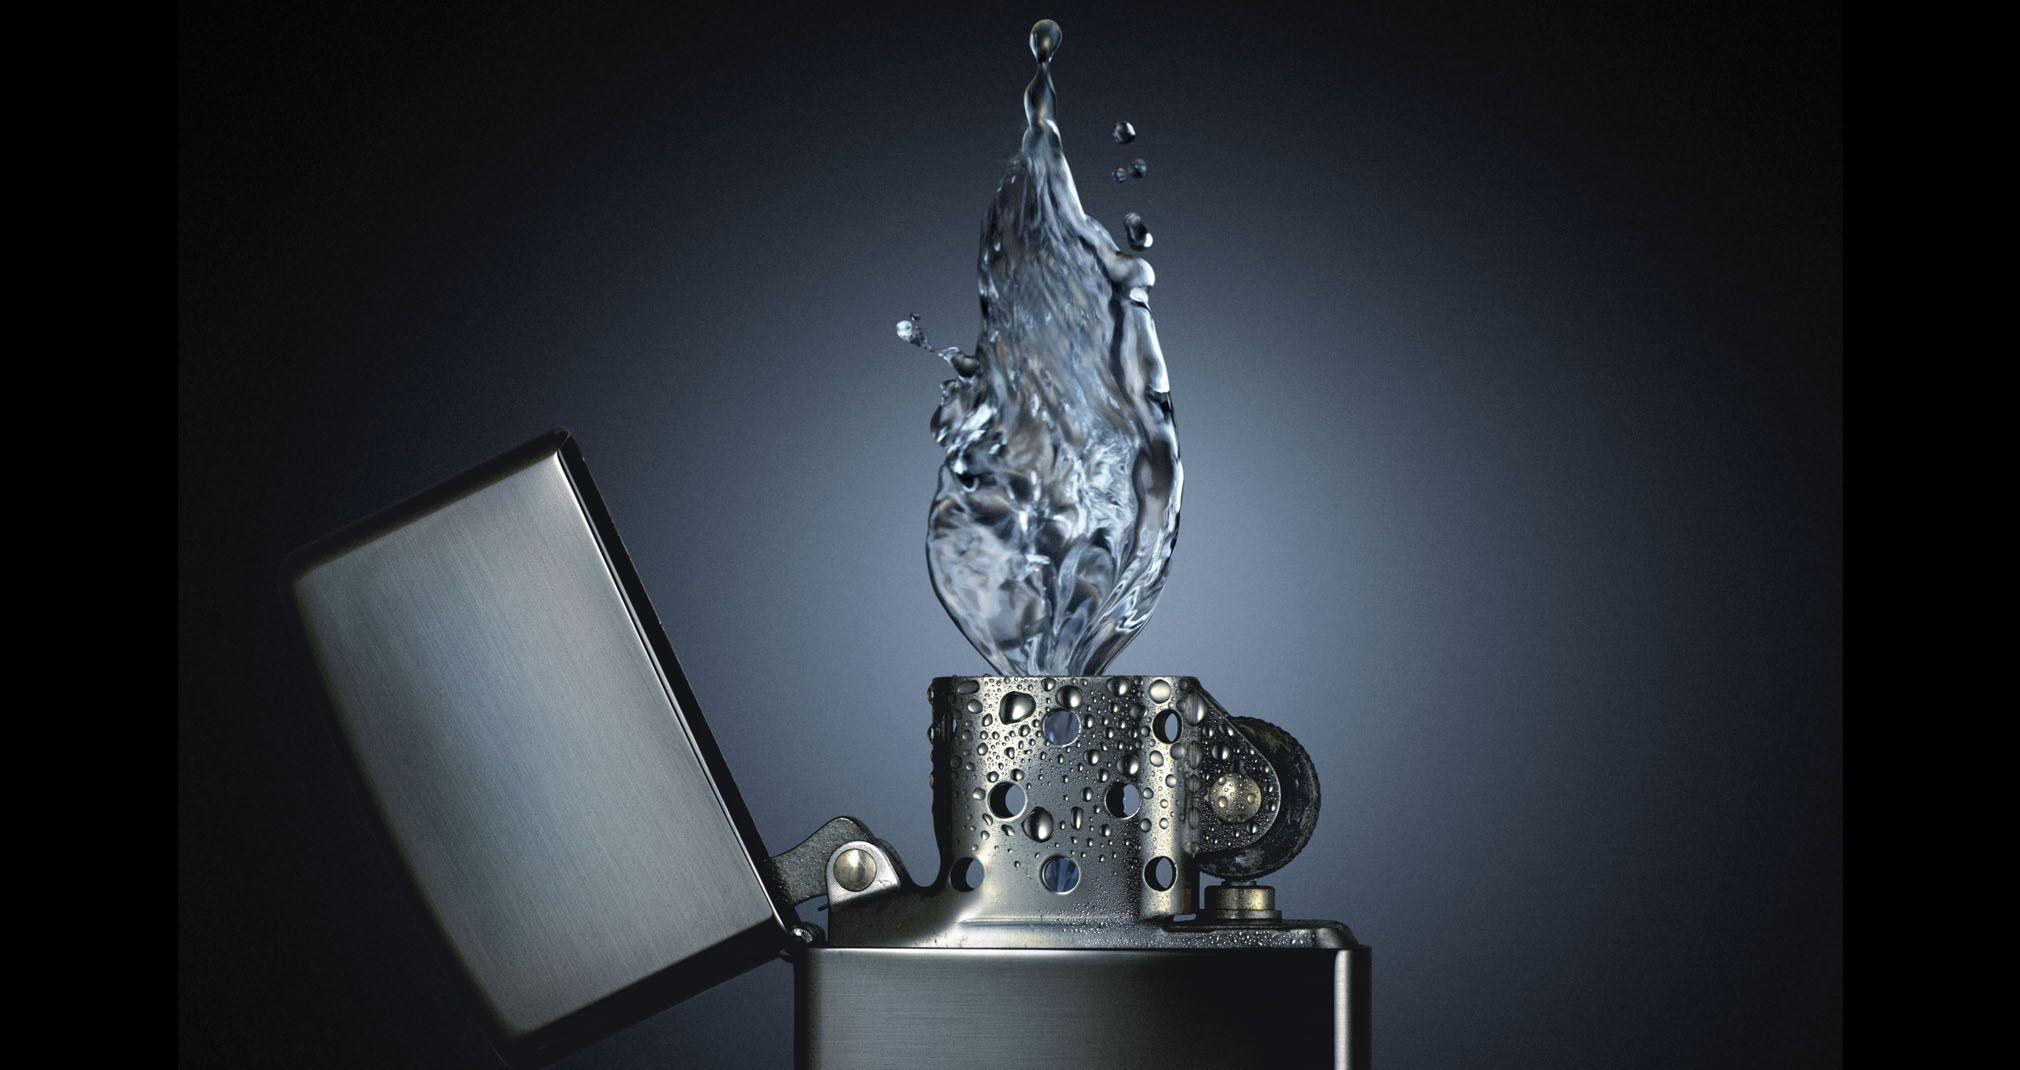 Zippo Lighter Emits Water Wallpaper. Viewallpaper